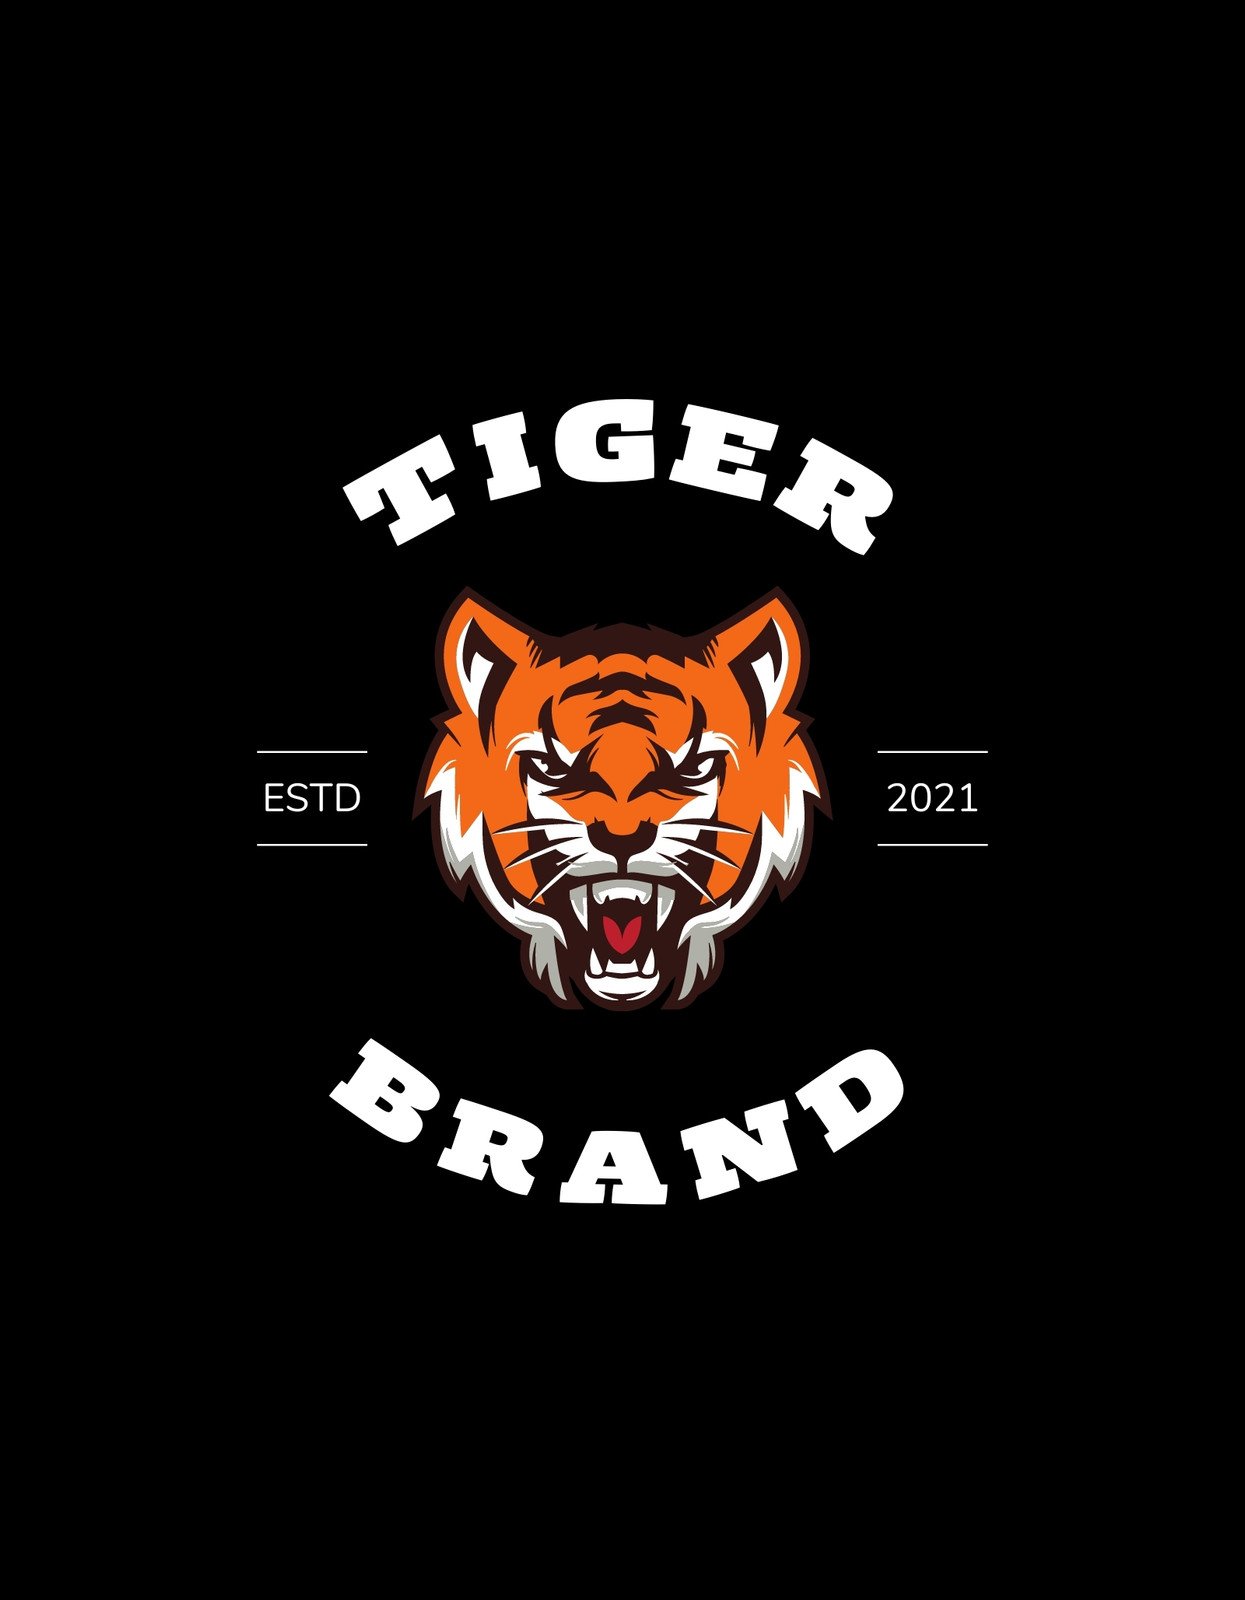 design at shirt logo